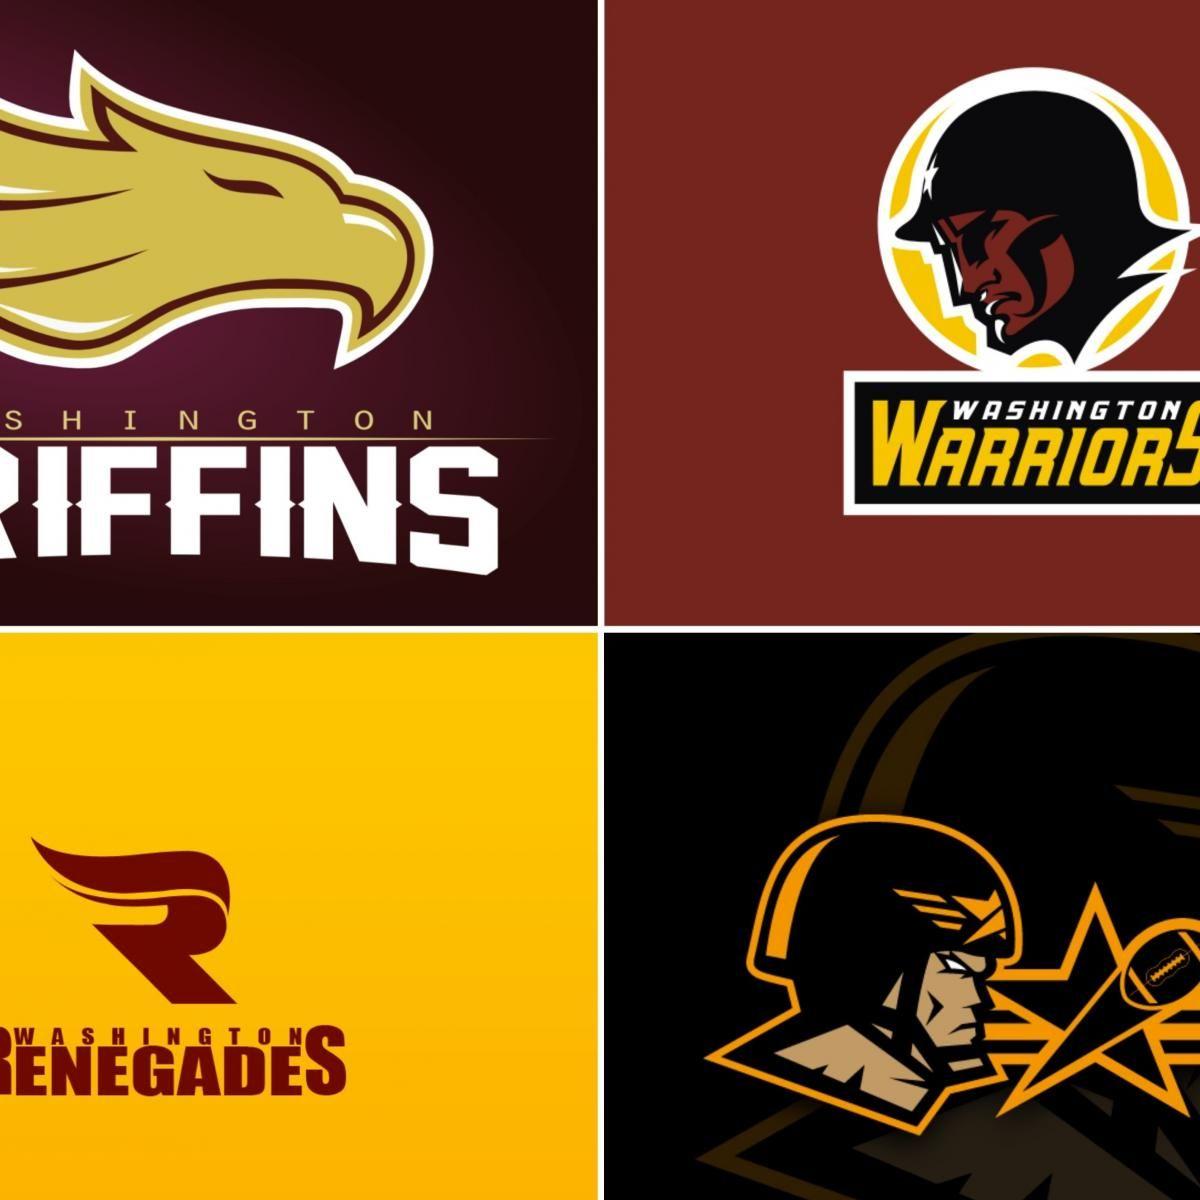 Washington Redskins Logo - Artists Come Up with New Names and Creative Logos for Washington ...